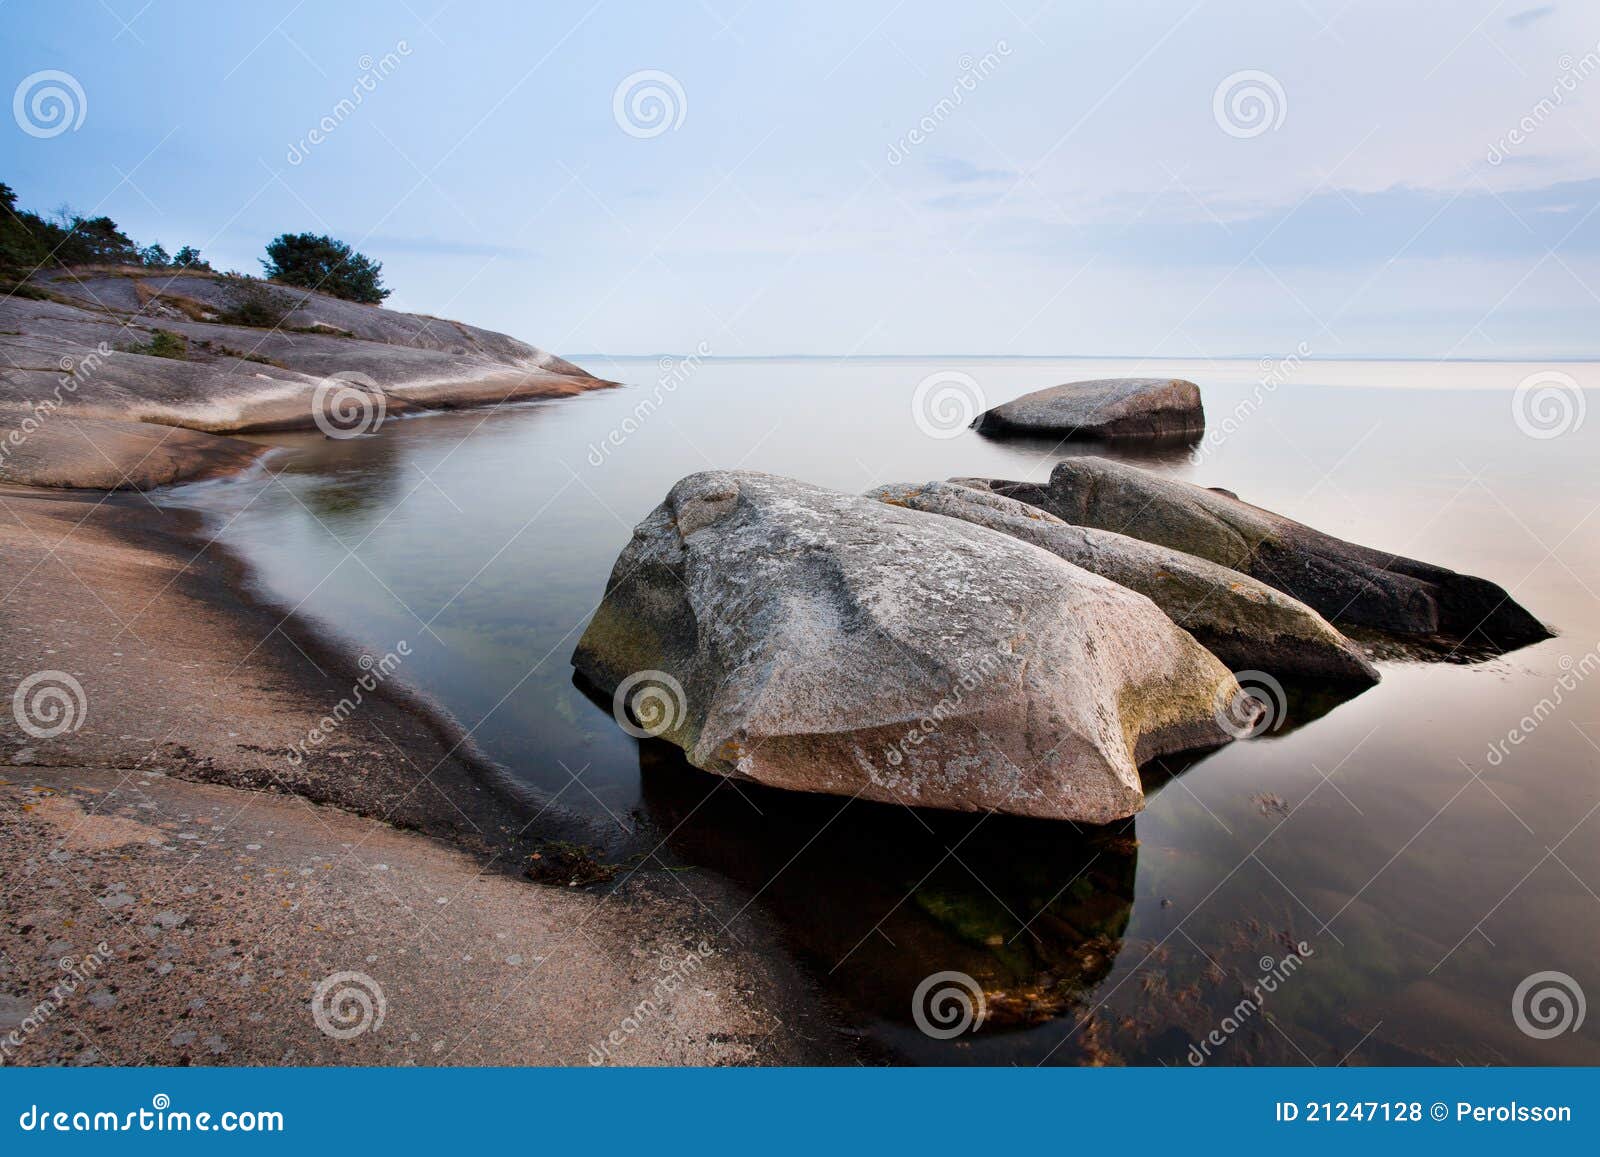 stones in calm sea